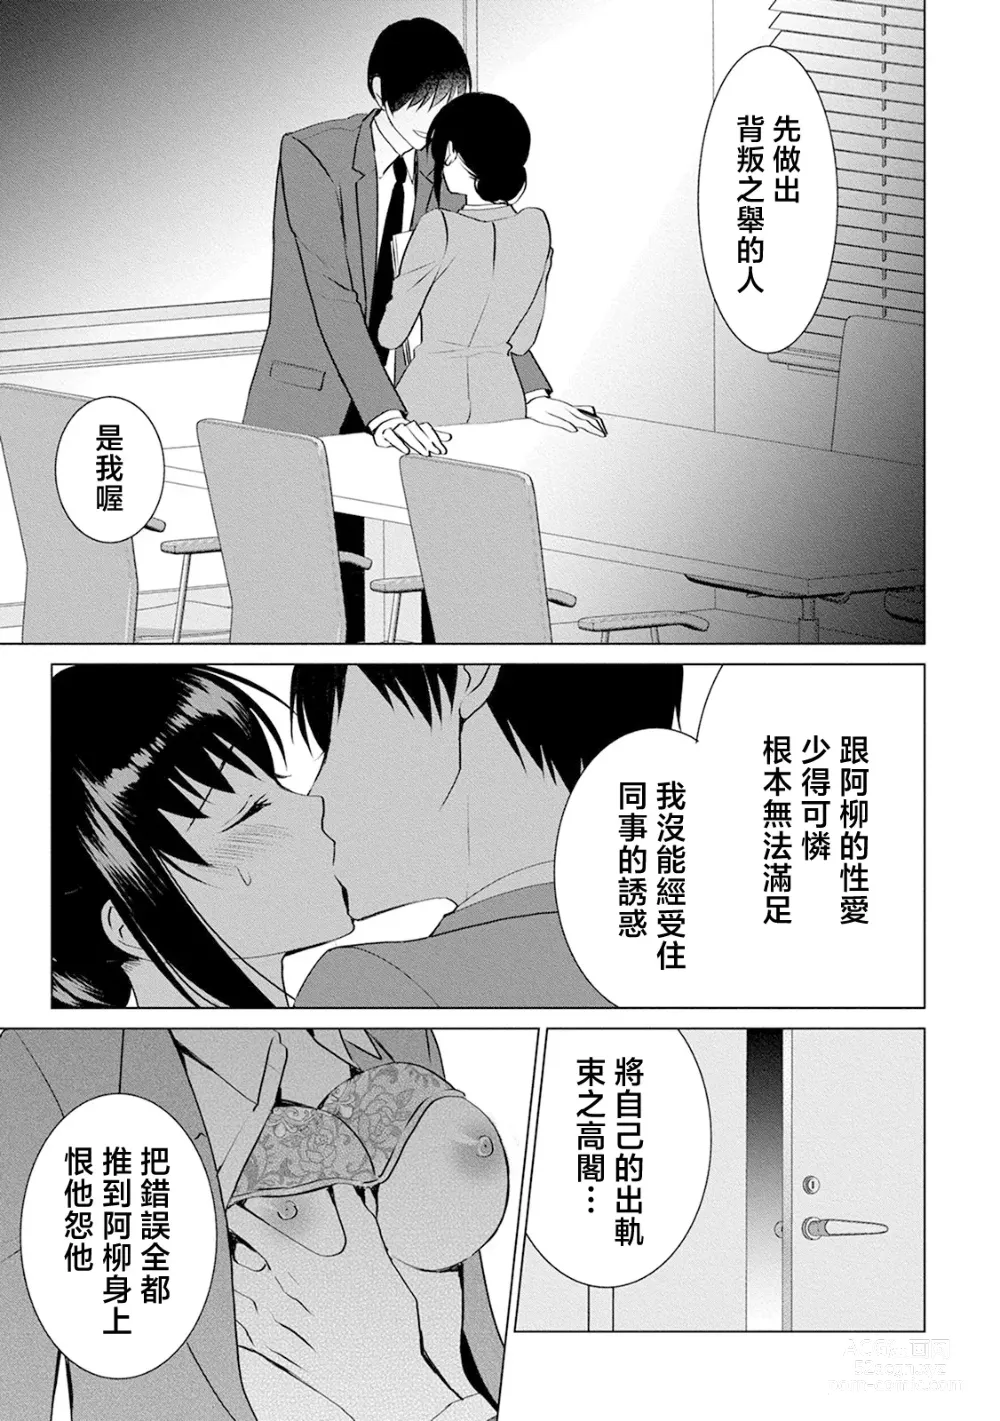 Page 75 of doujinshi 化身魅魔来取精～爱与背叛的情仇恋焰～